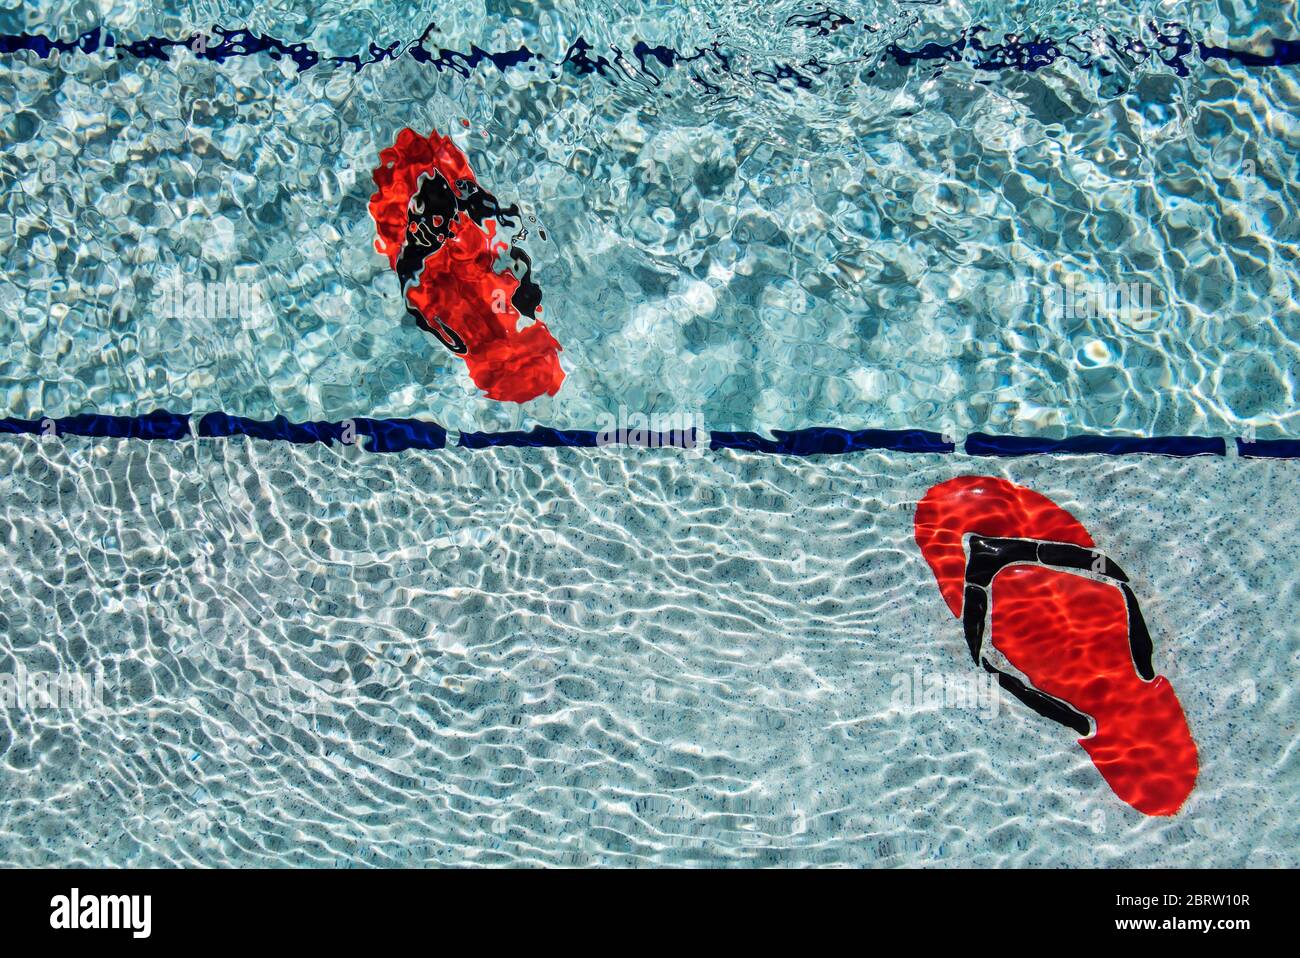 Flip flop design tiles at bottom of swimming pool. Stock Photo